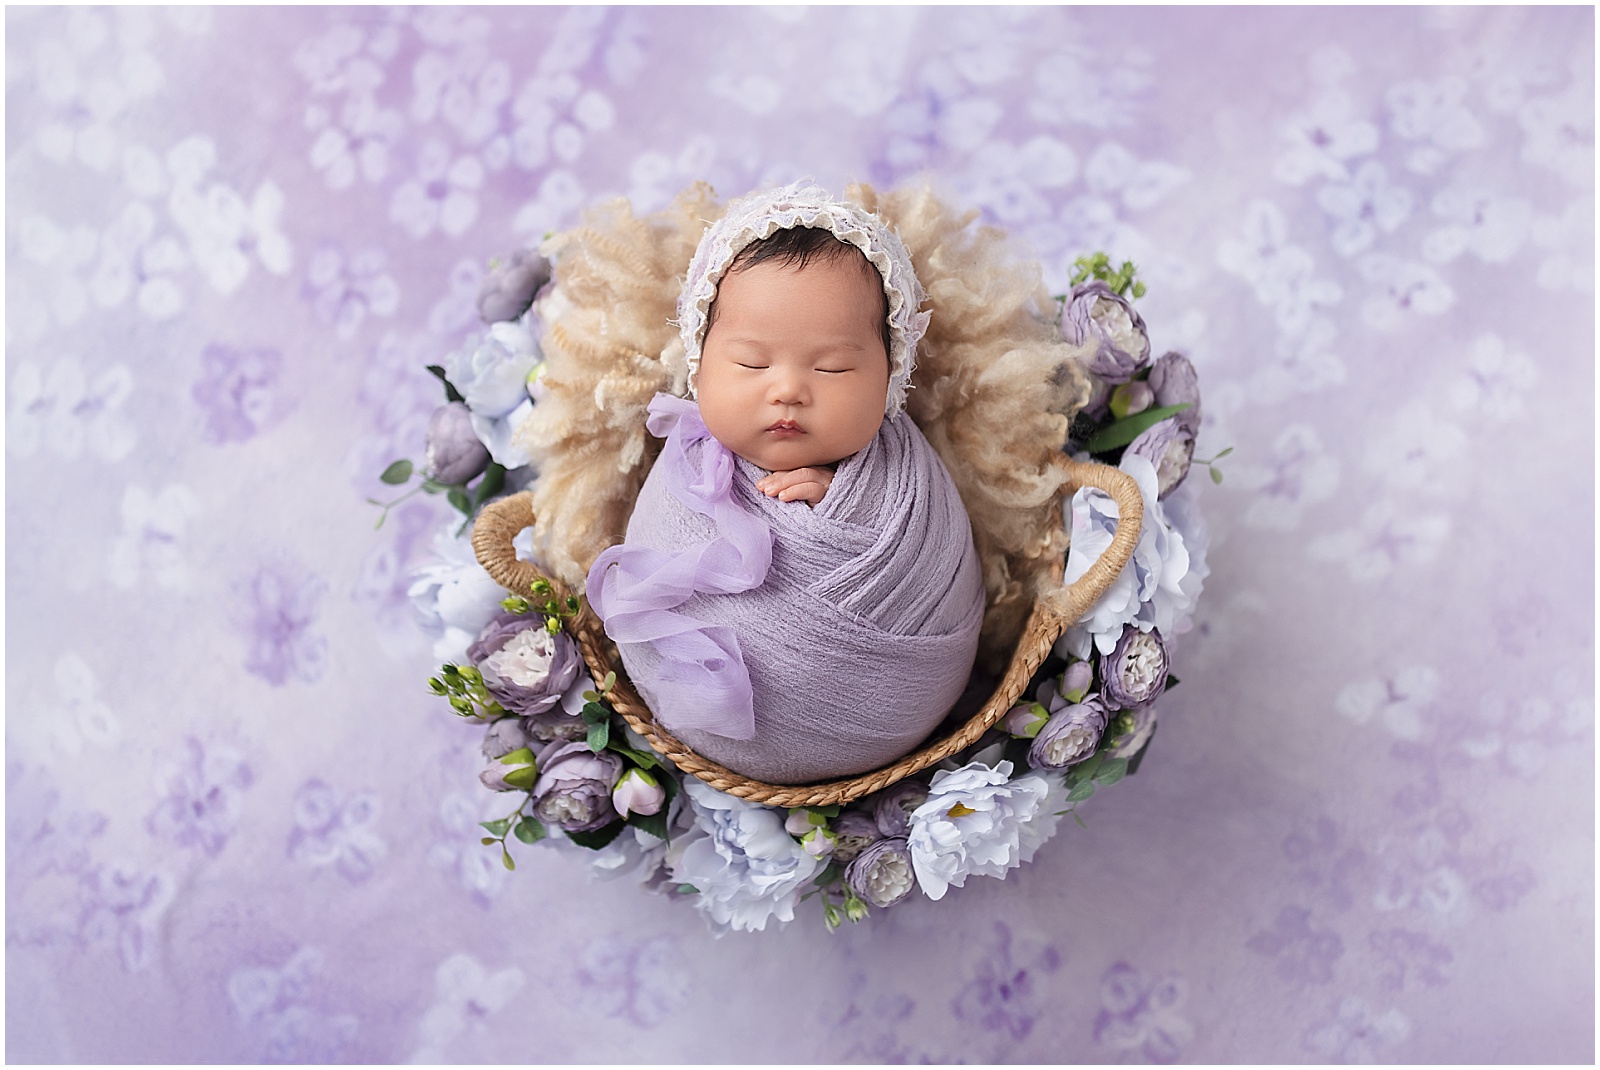 Baby girl sleeping in a purple basket